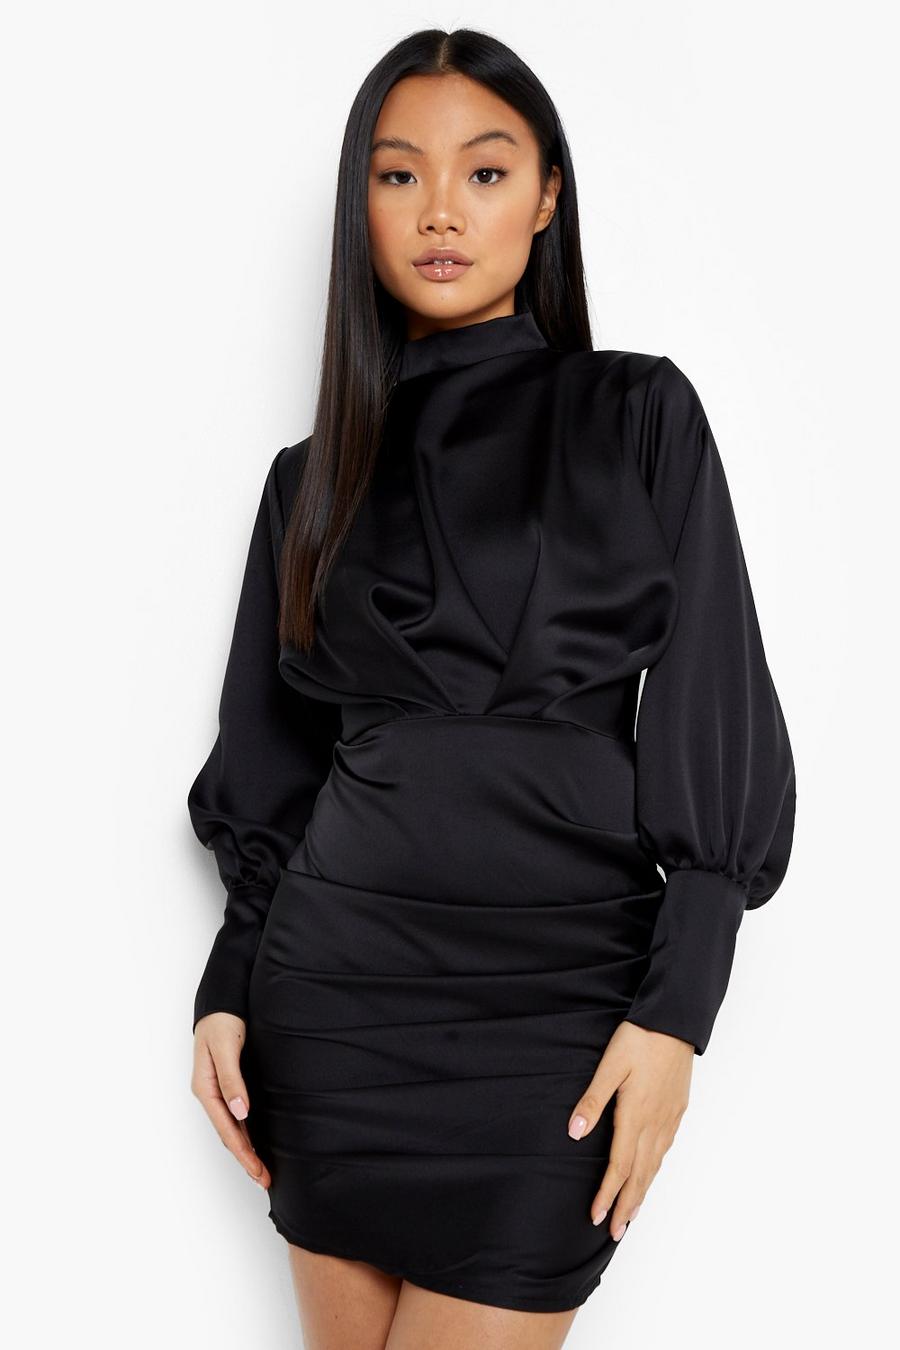 Black שמלת פטיט עם קפלים, כפתורים בחפתים וצווארון גבוה